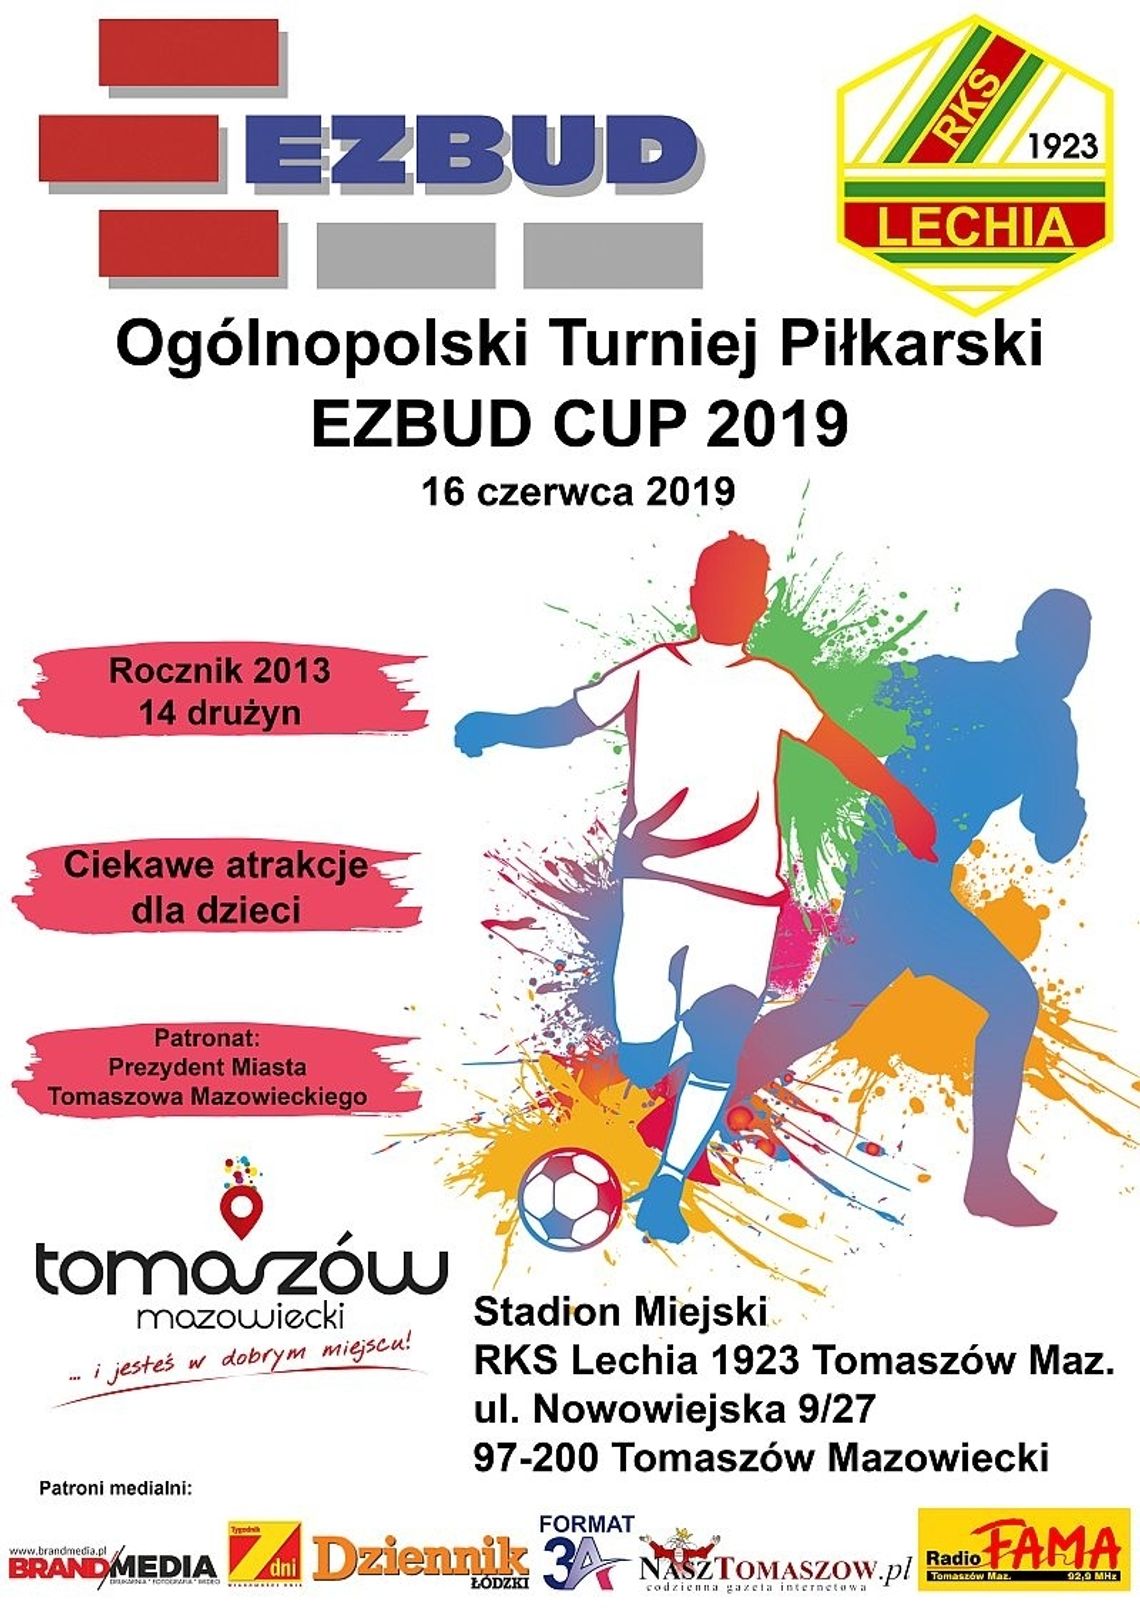 Ogólnopolski Turniej Piłkarski EZBUD CUP 2019